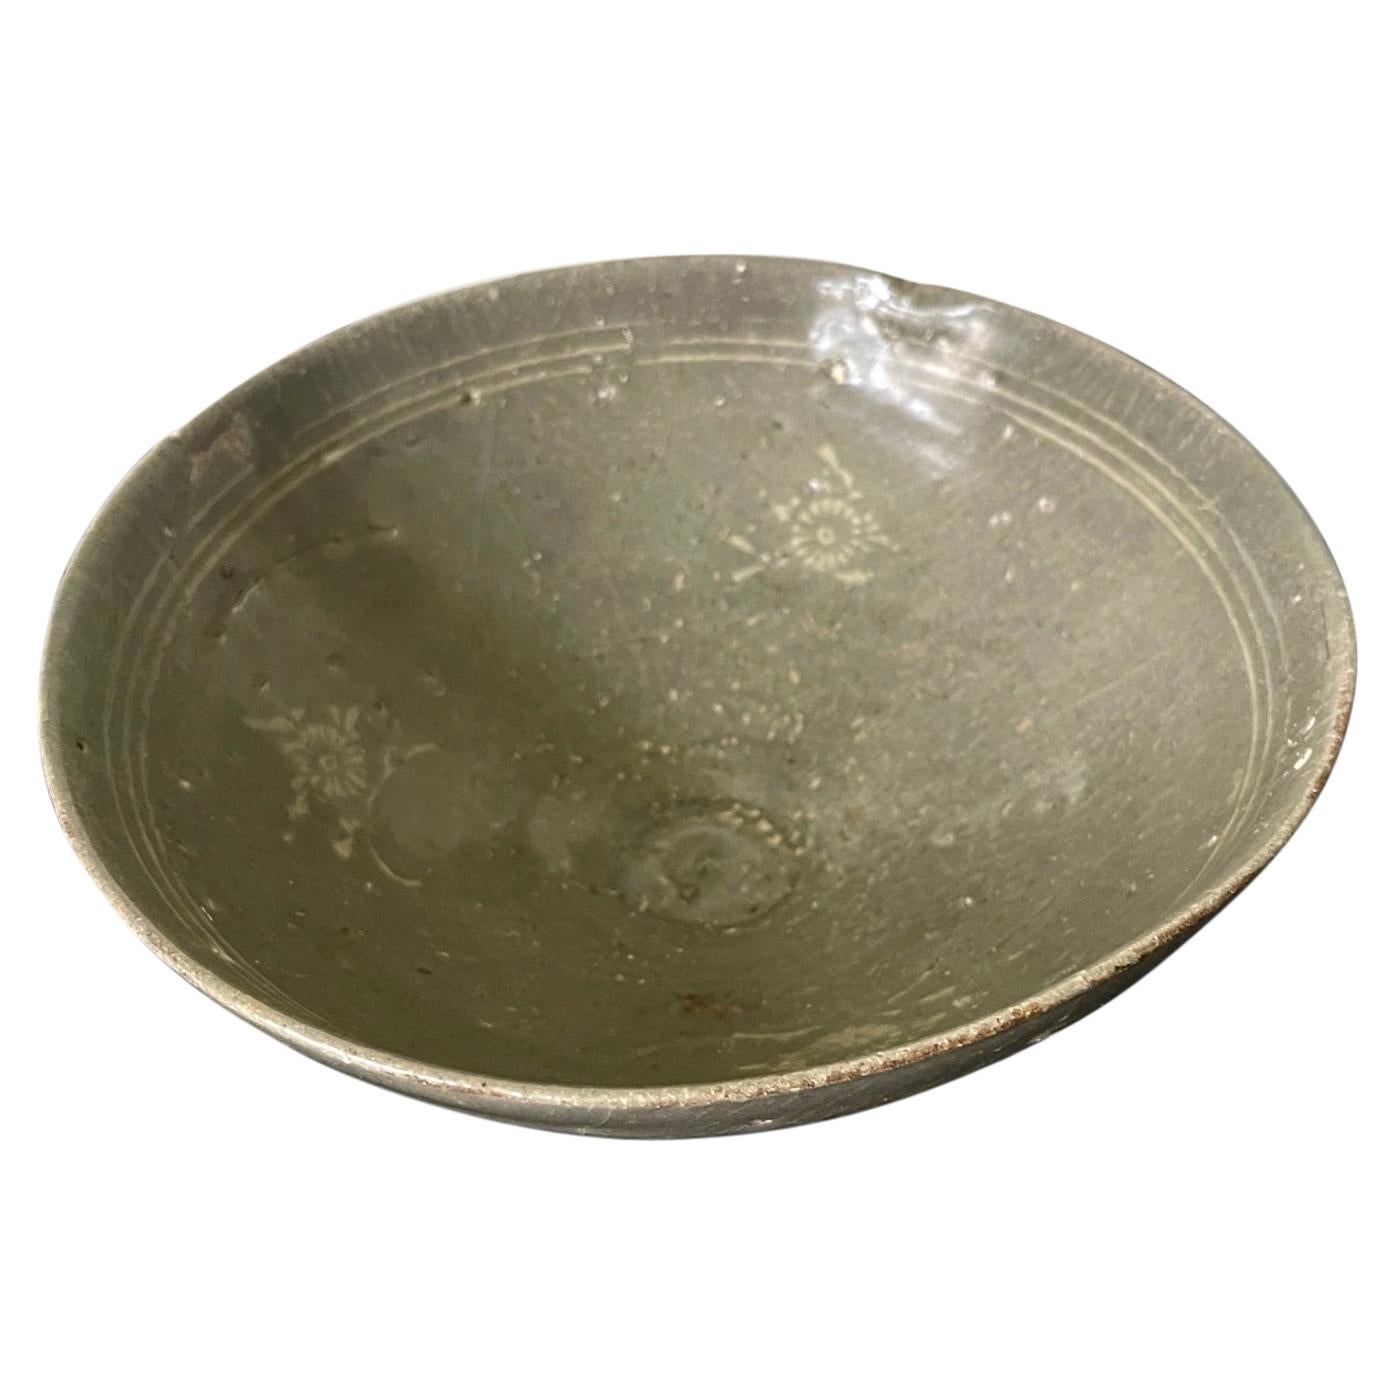 Korean Ceramic Celadon Bowl with Slip Inlay Goryeo Dynasty